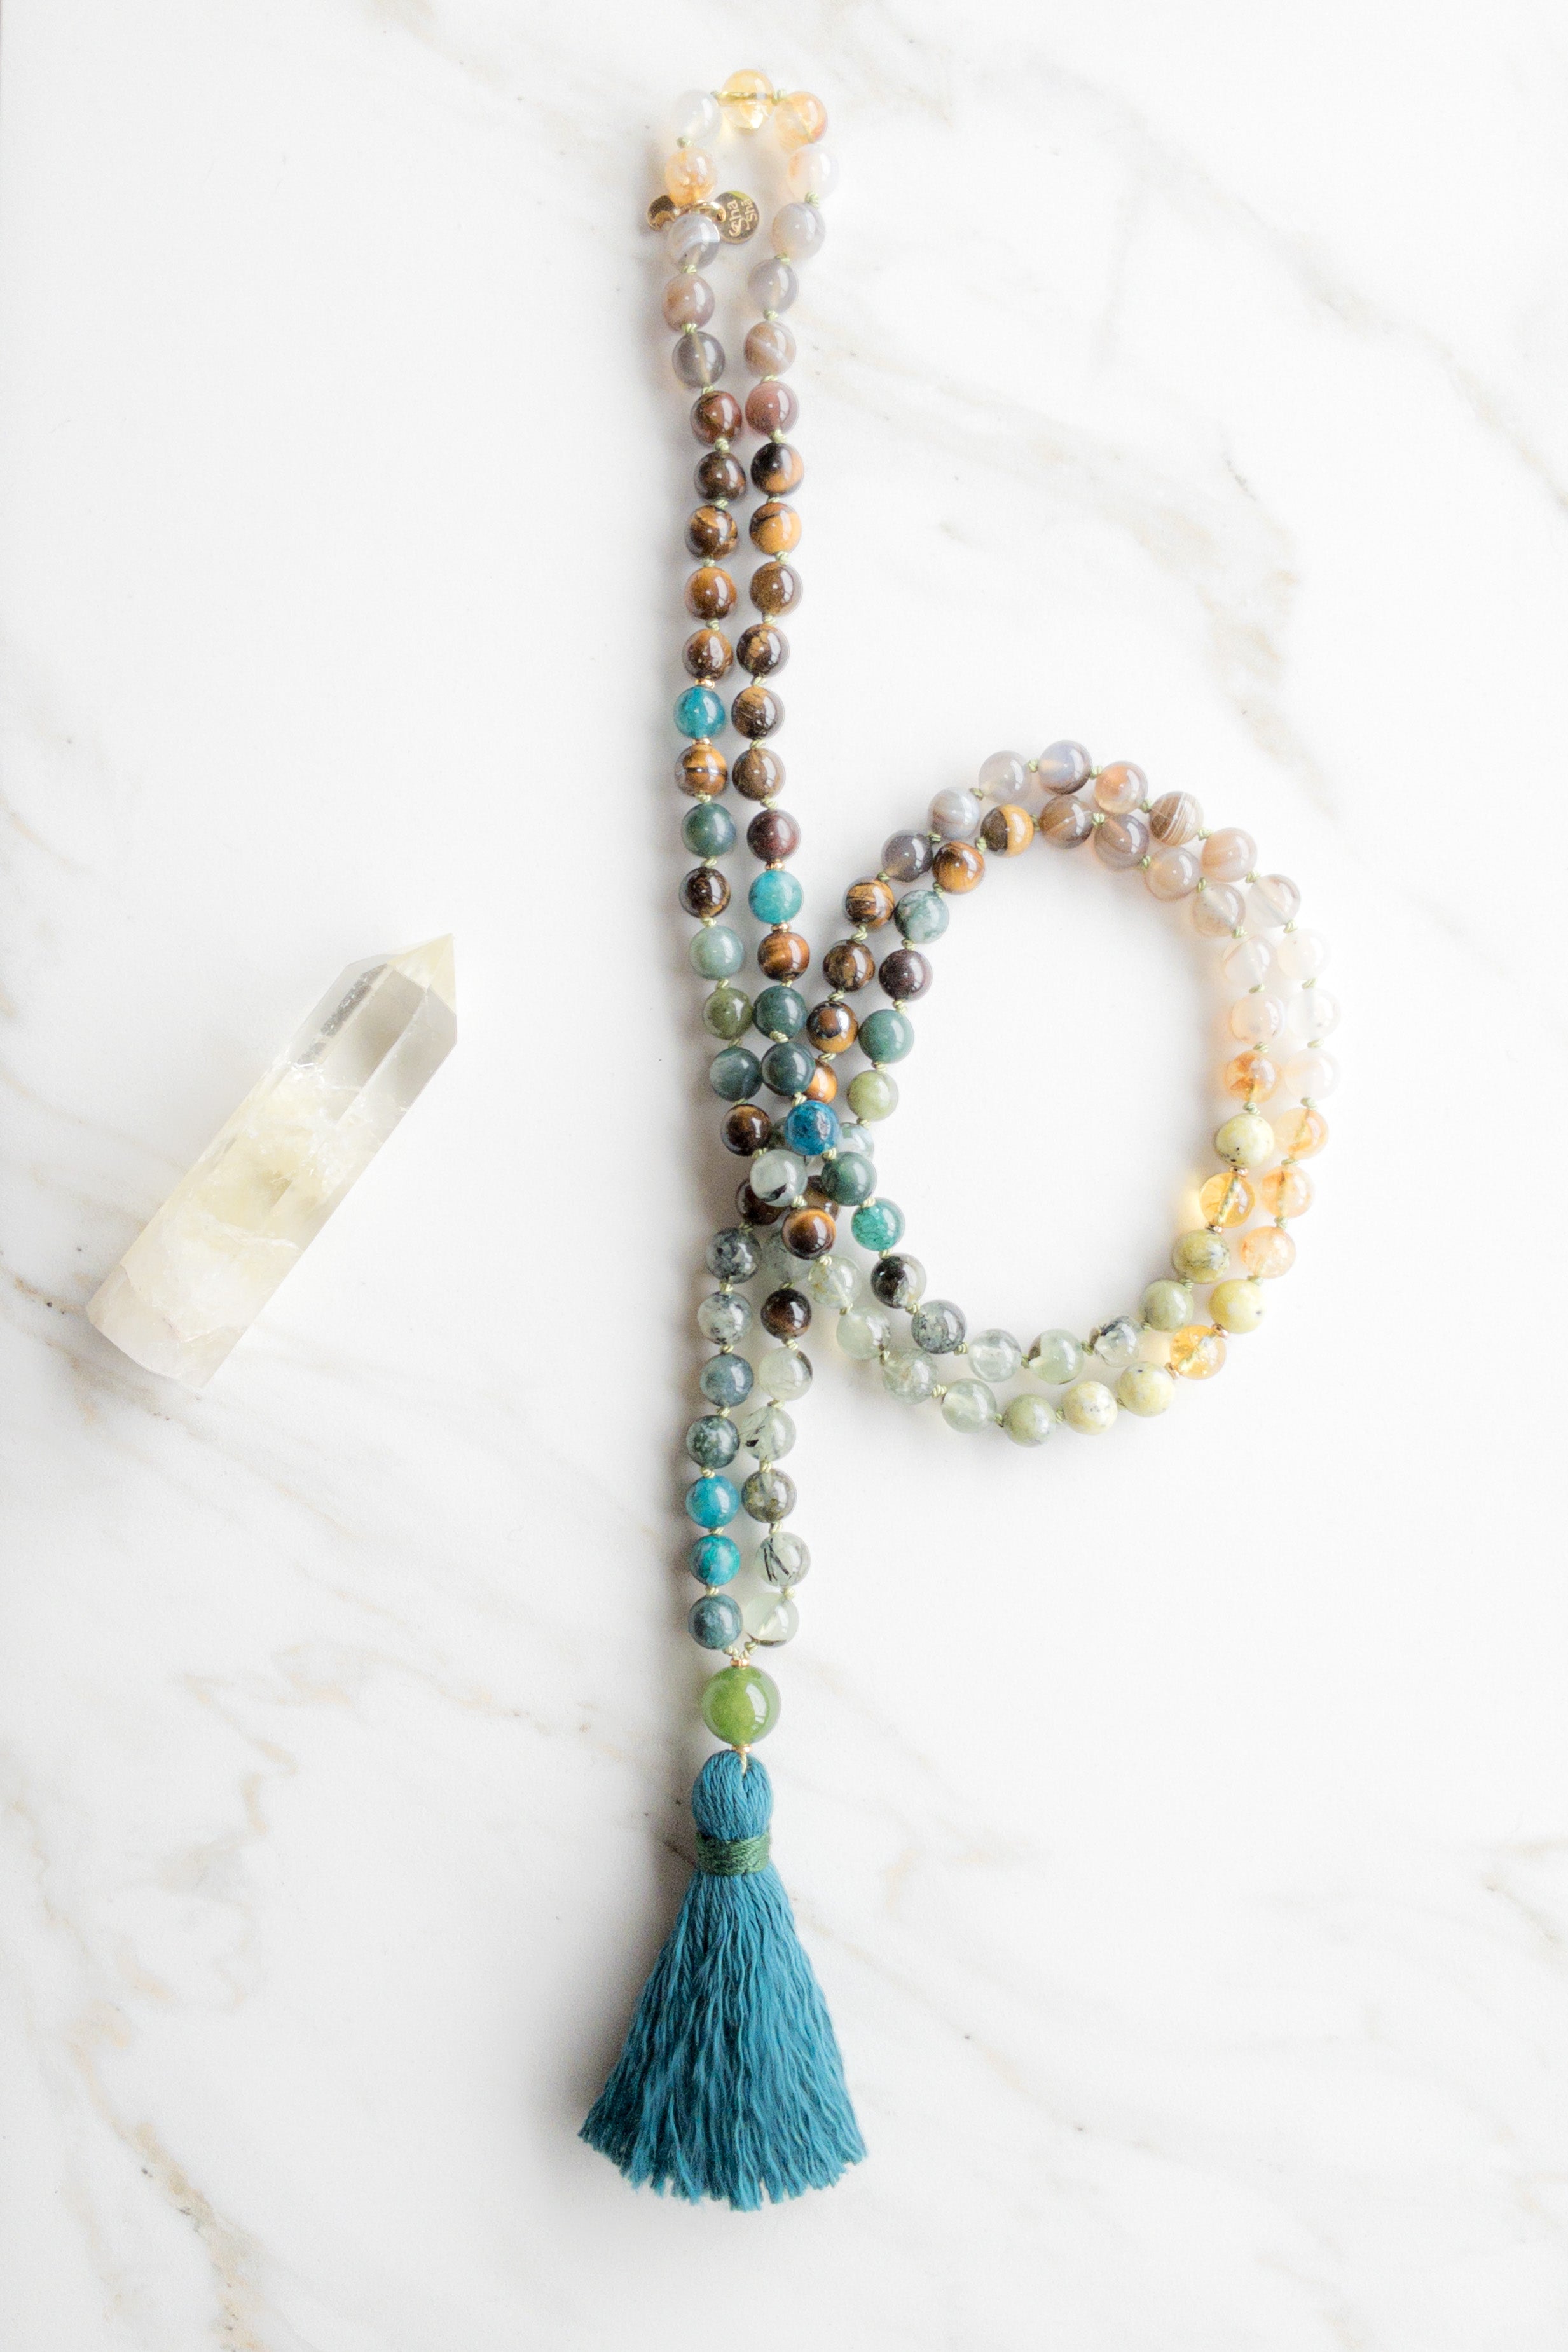 Inner Garden japaMala 108 beads - Assorted Gemstones - OceanEye - shashā jewellery Switzerland 